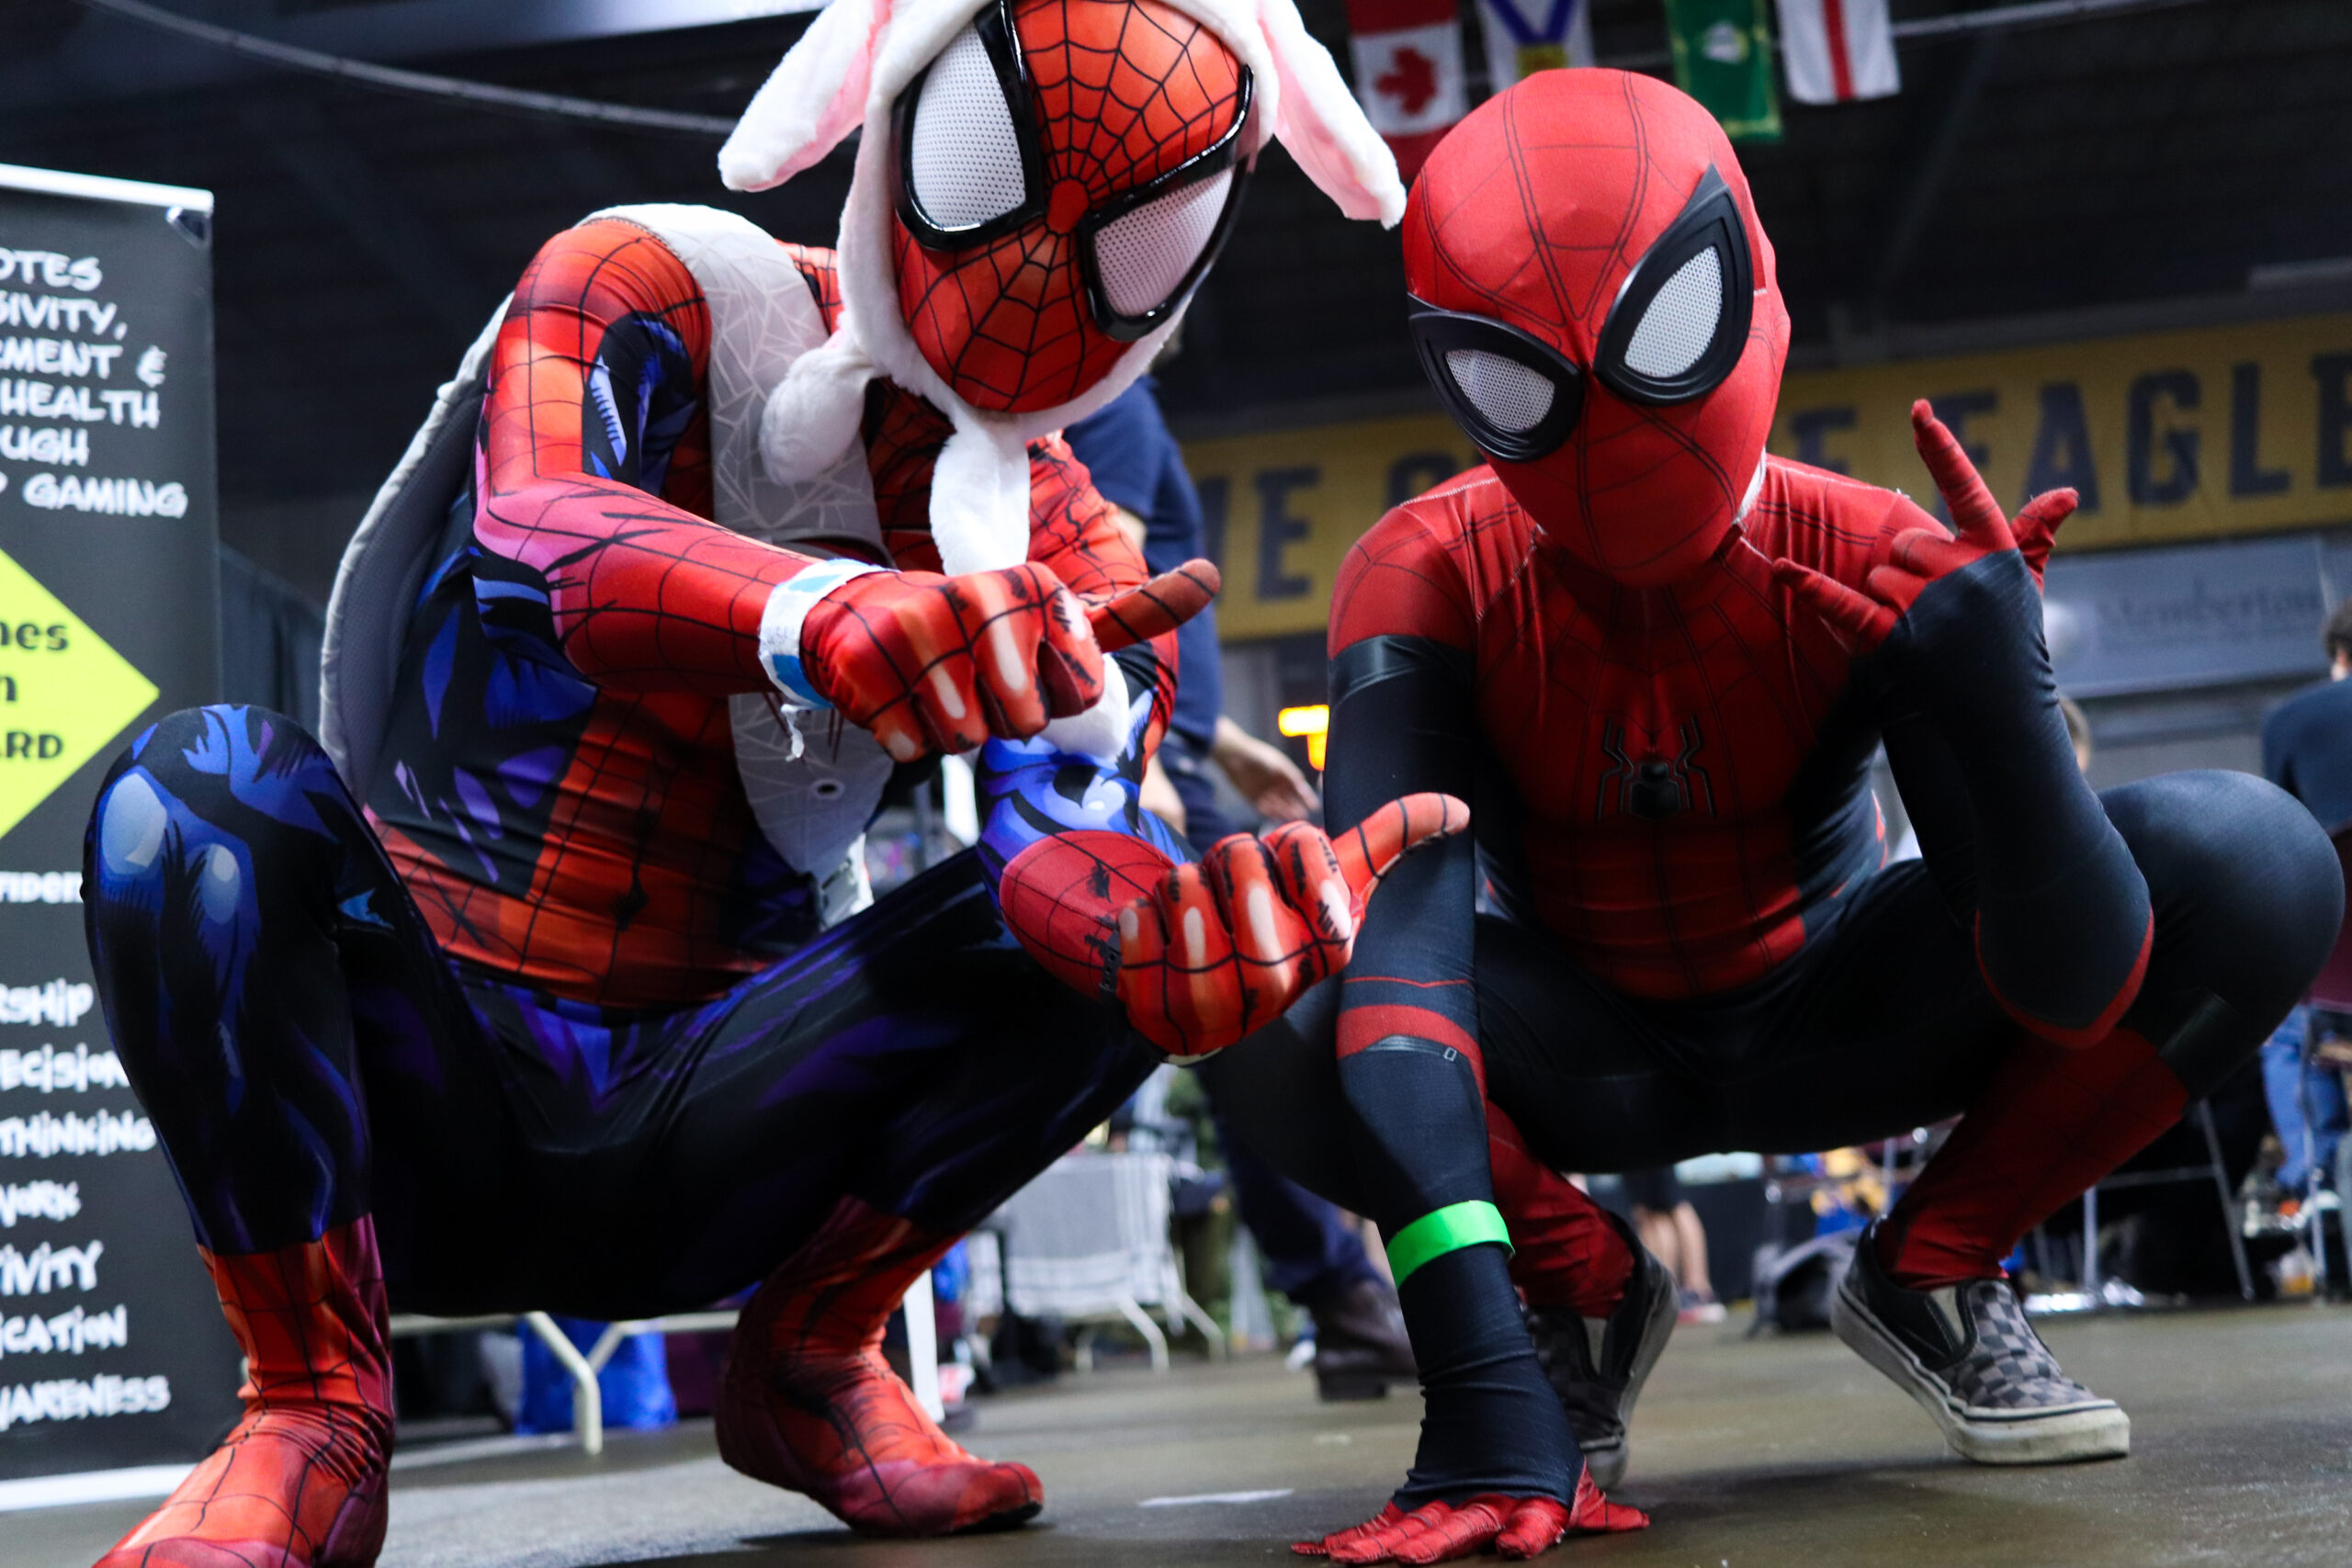 CaperCon Cosplay Costumes - Spiderman